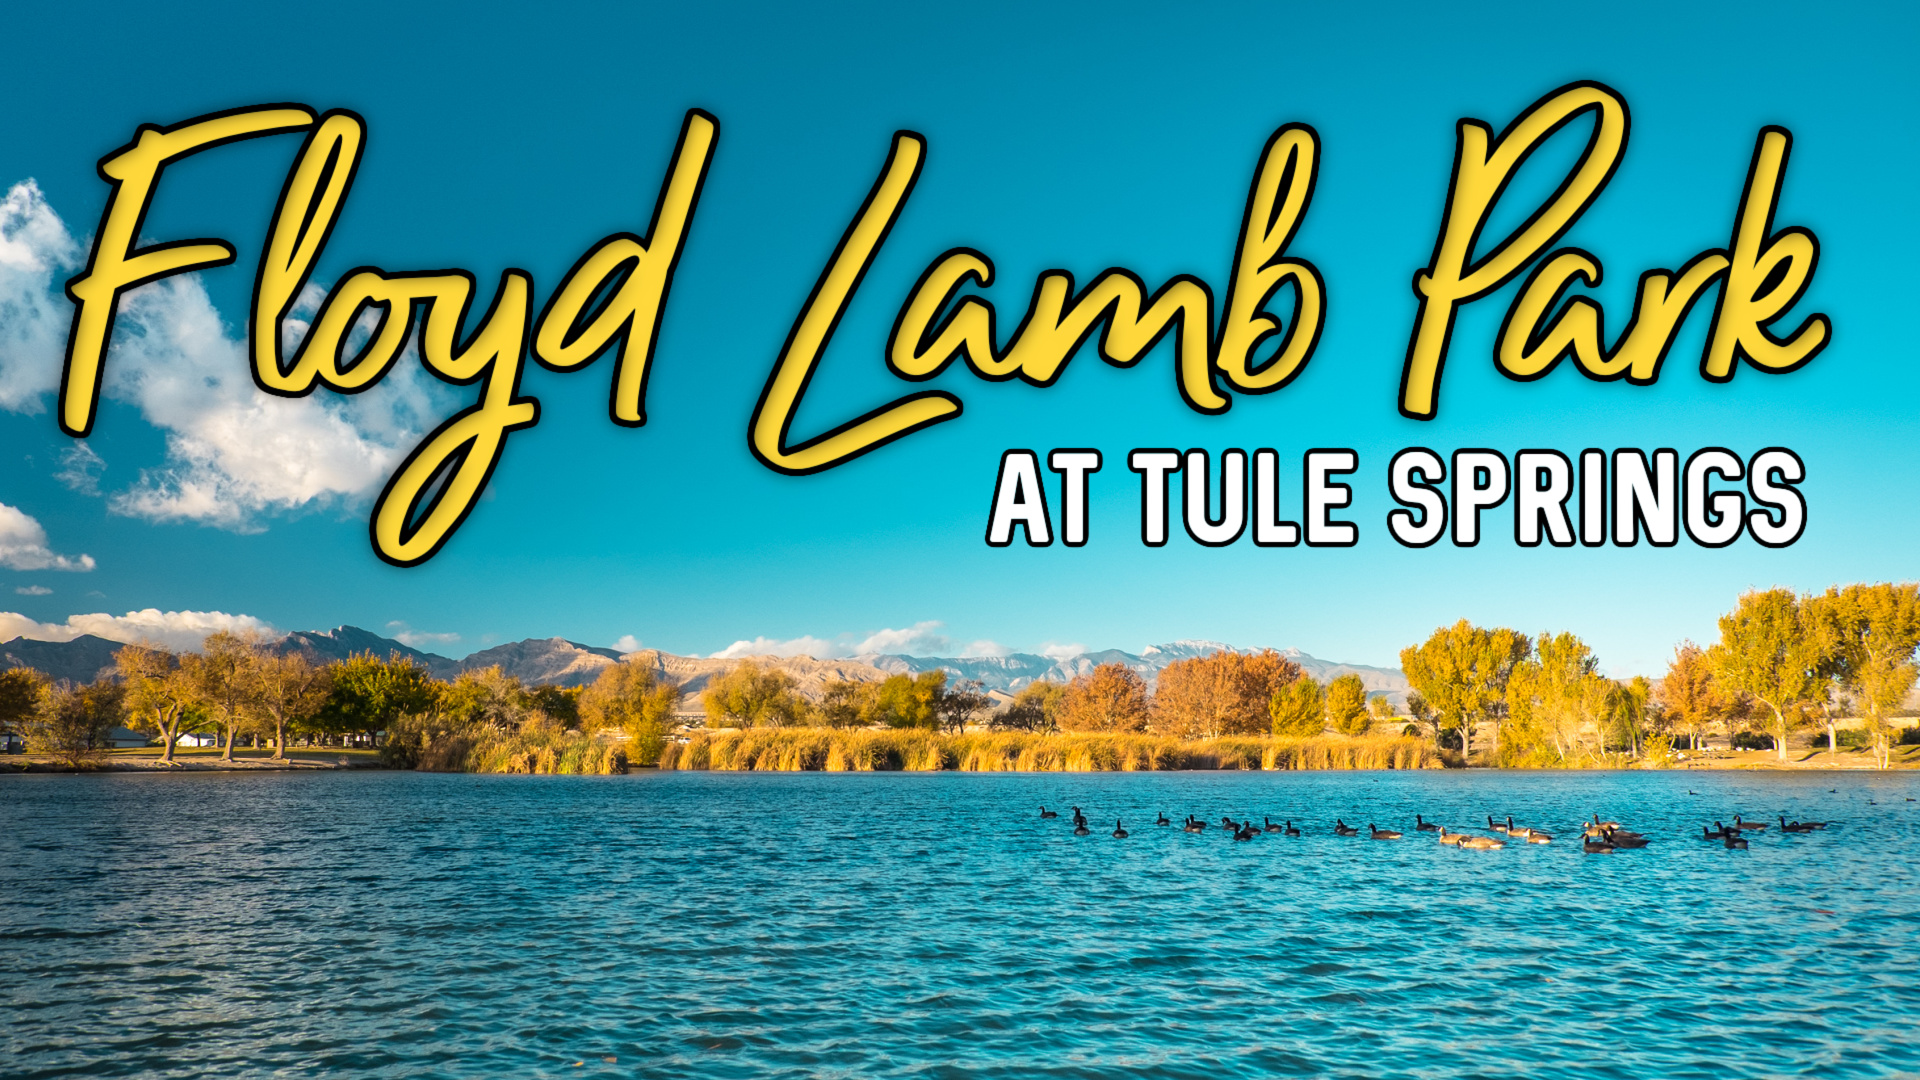 Floyd Lamb Park at Tule Springs